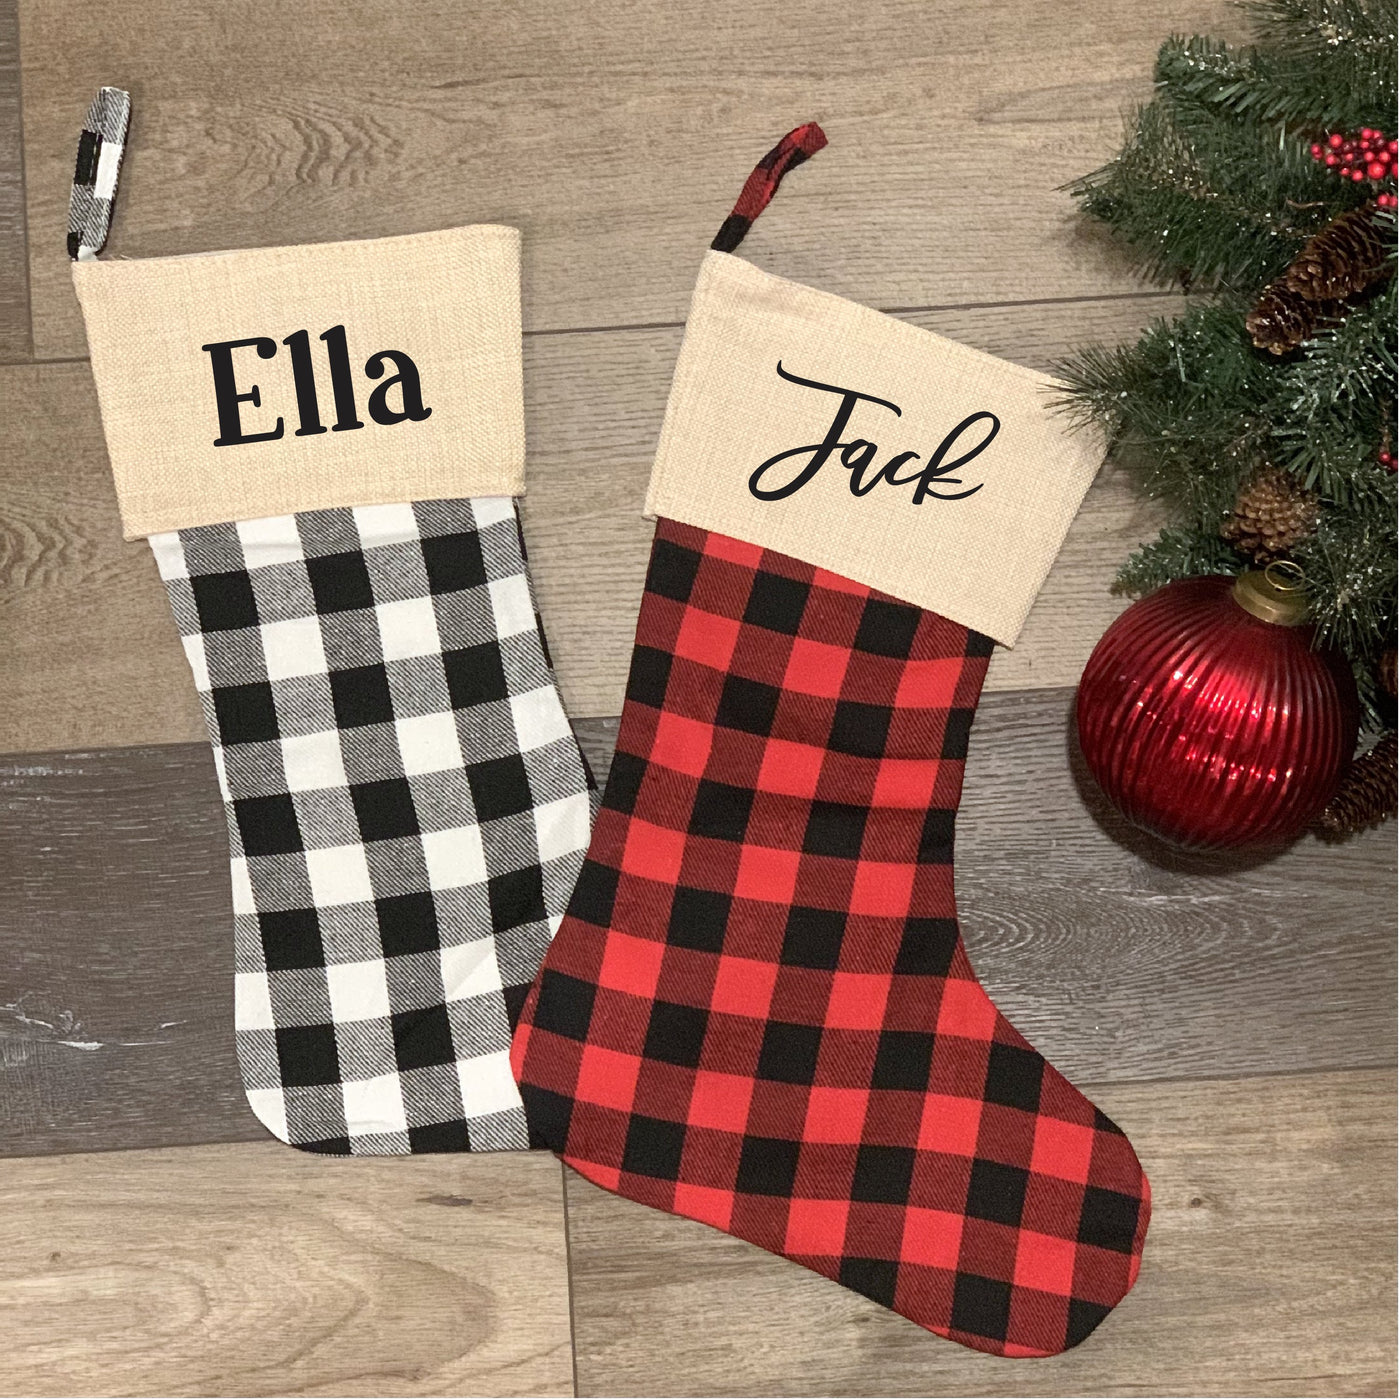 Personalized Christmas Stockings - Barn Street Designs